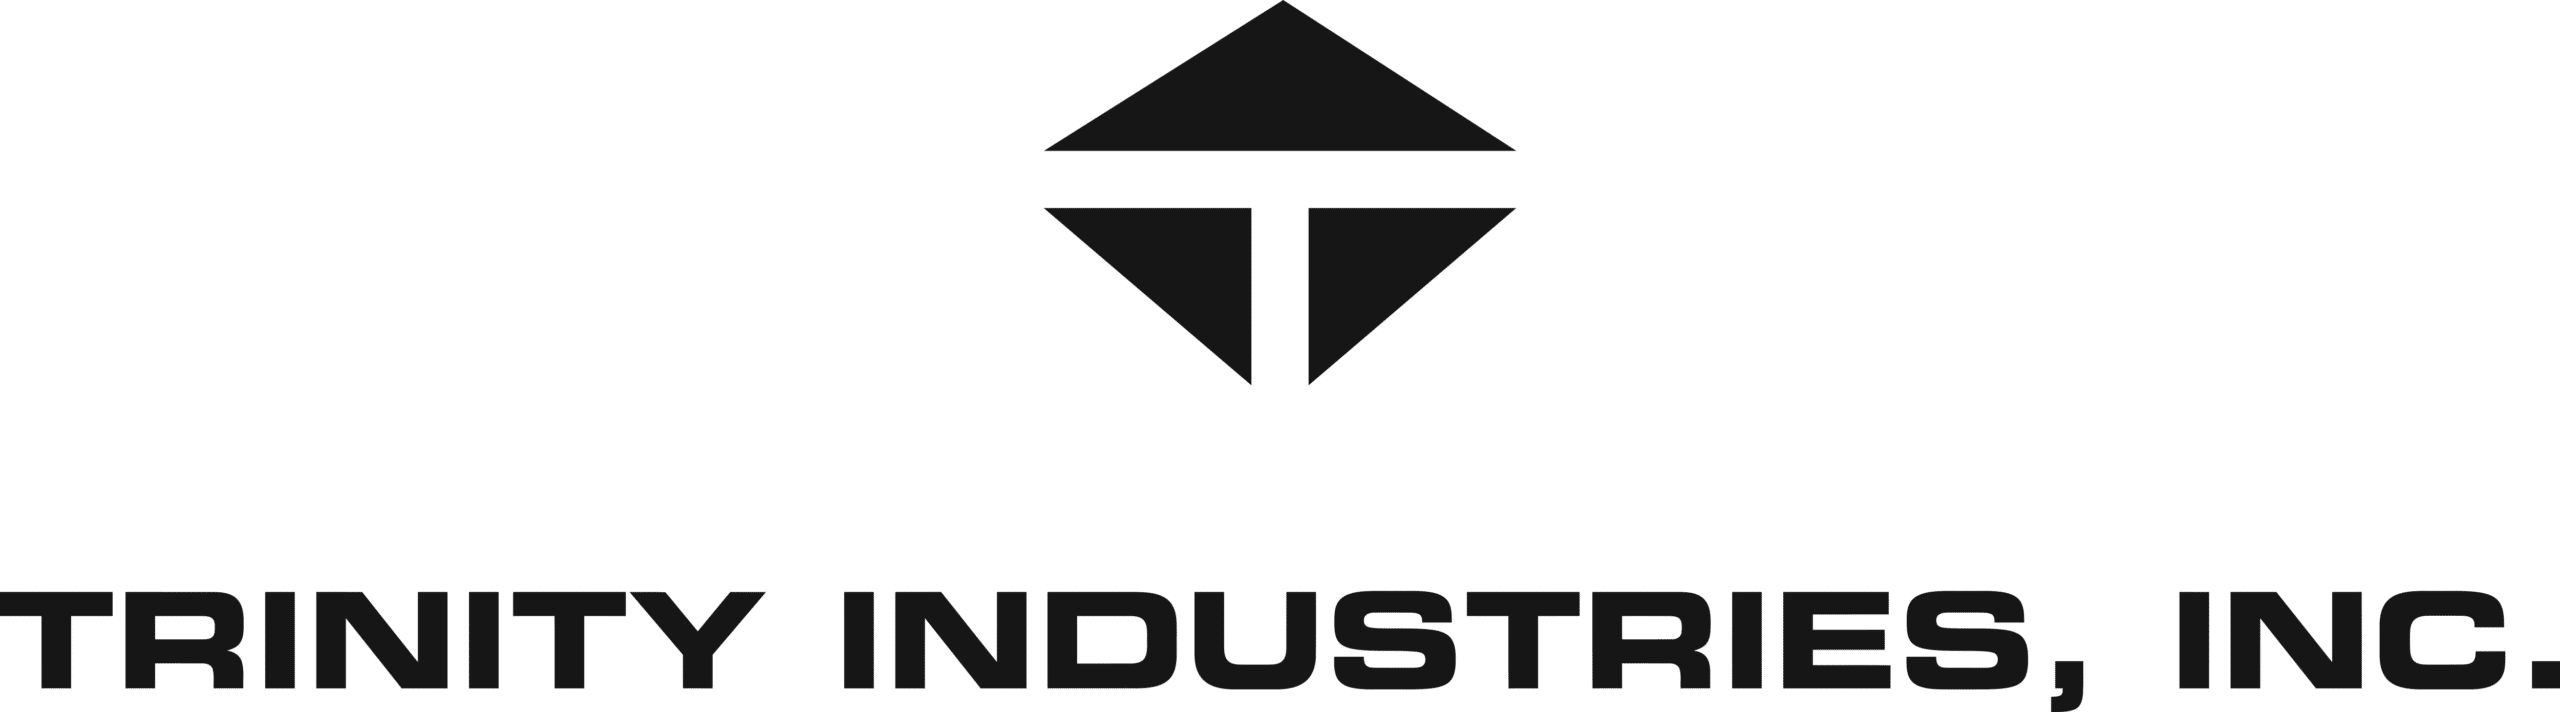 Trinity Industries, INC logo